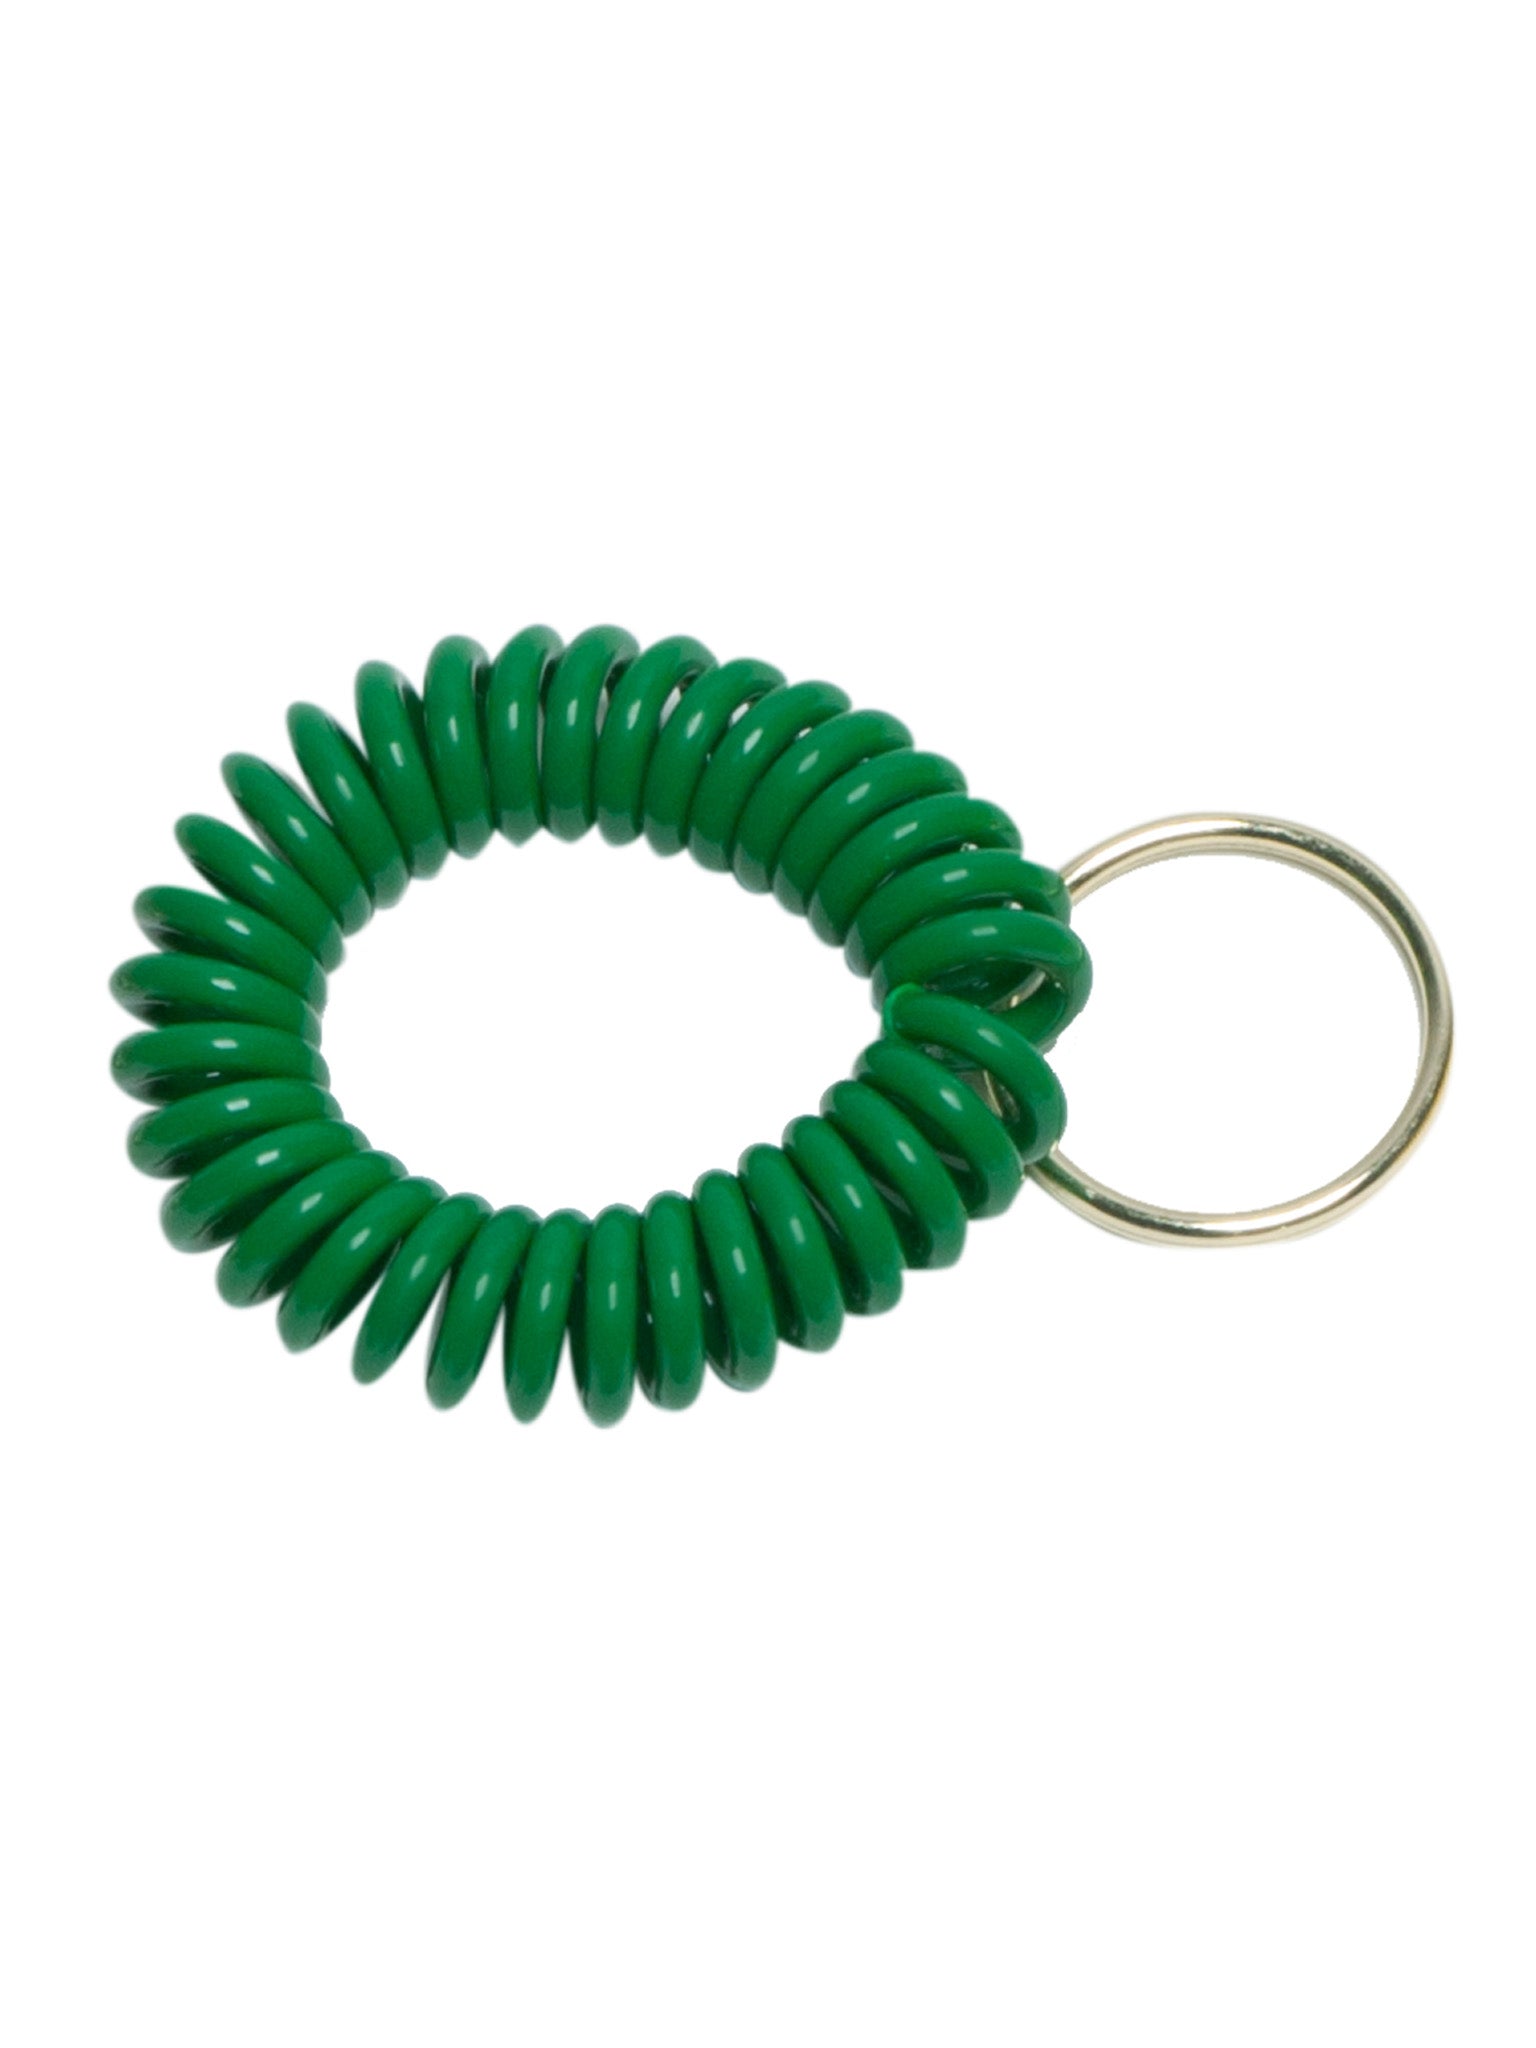 Spiral Bracelets For Whistle - Green